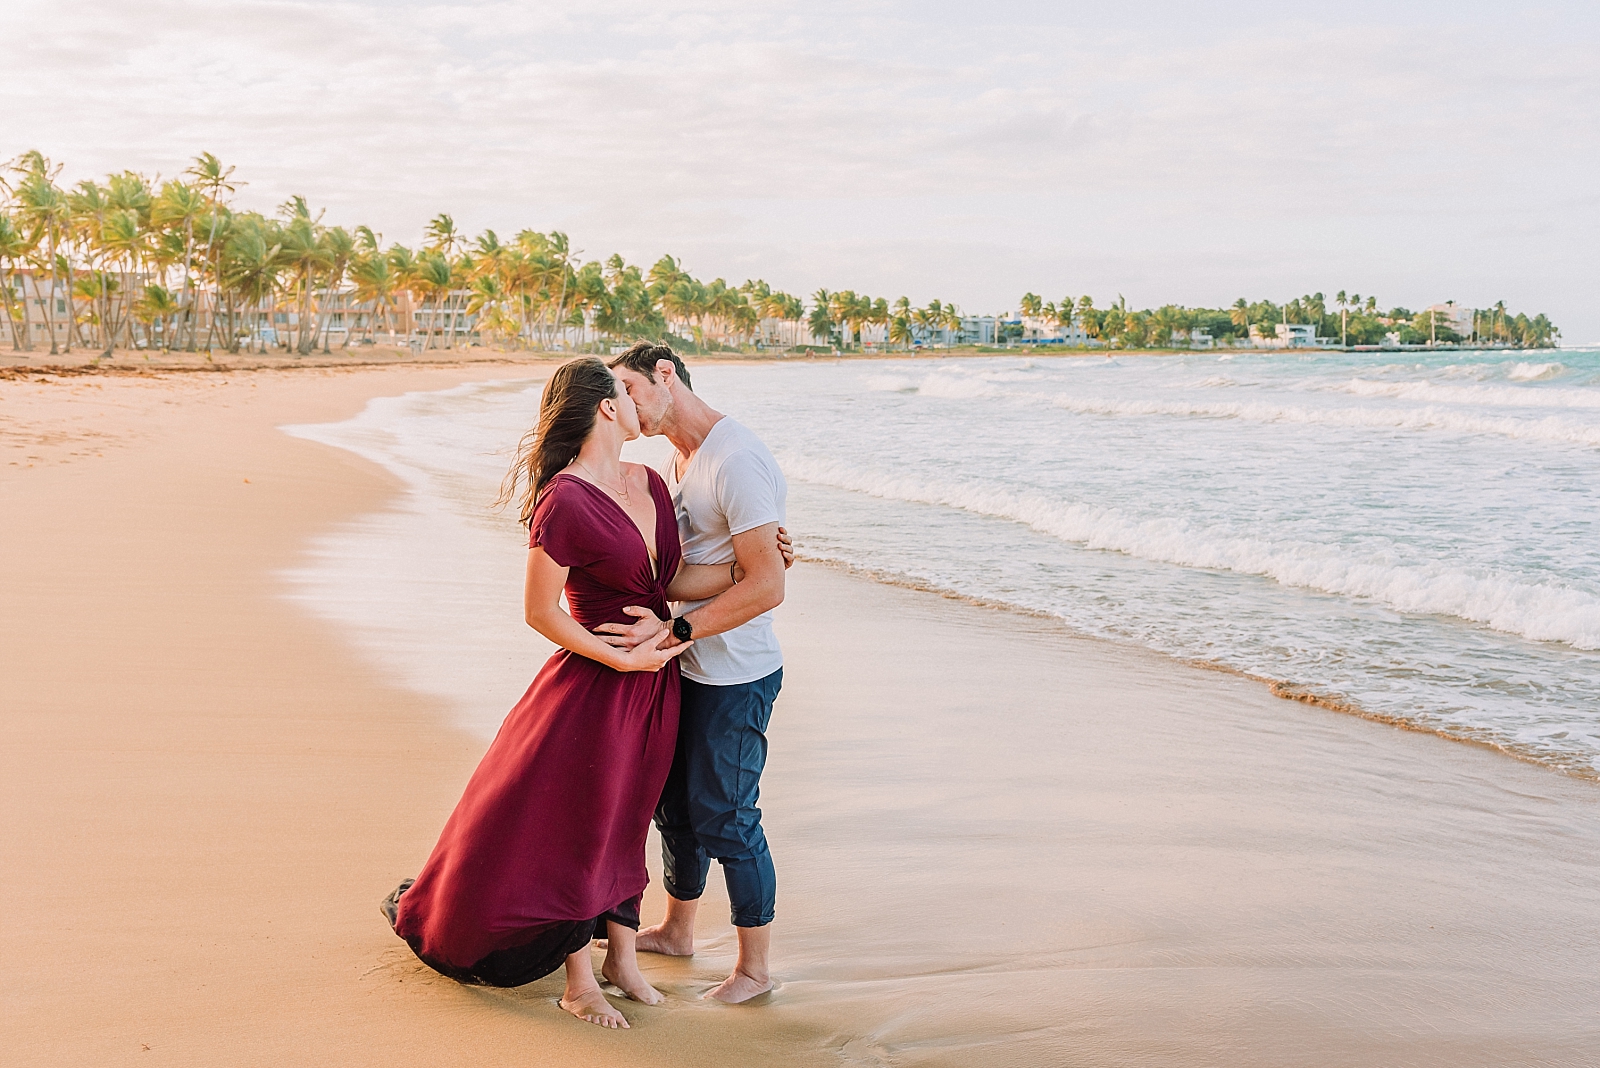 Puerto Rico Beach Photographer, Playa Azul Puerto Rico, Puerto Rico Wedding Photographer, Destination beach Photographer, beach weddings, pose ideas for couples